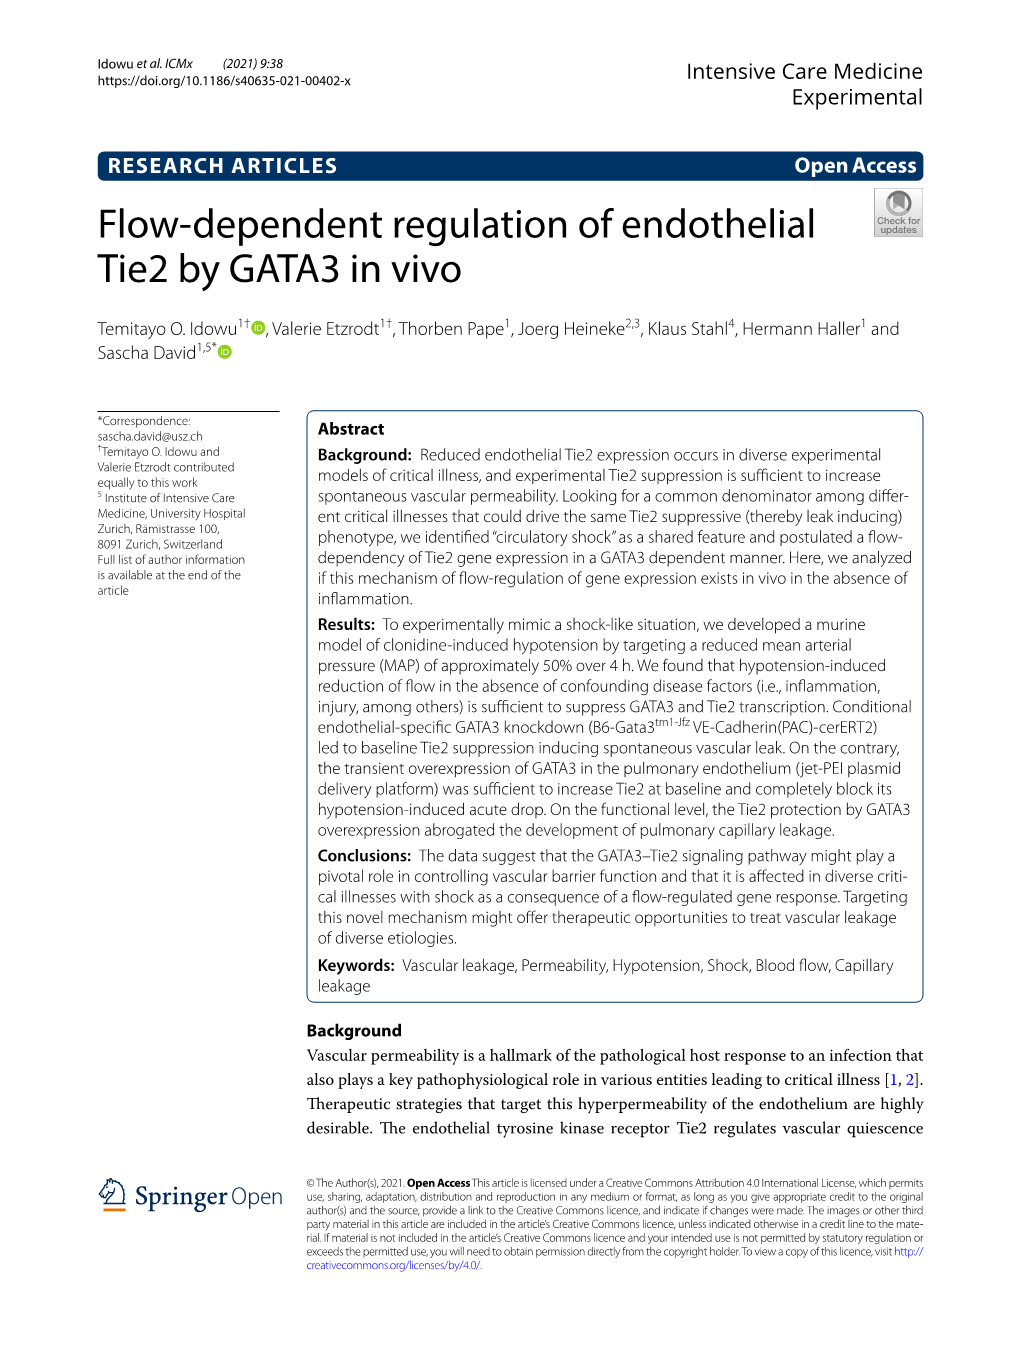 Flow-Dependent Regulation of Endothelial Tie2 by GATA3 in Vivo